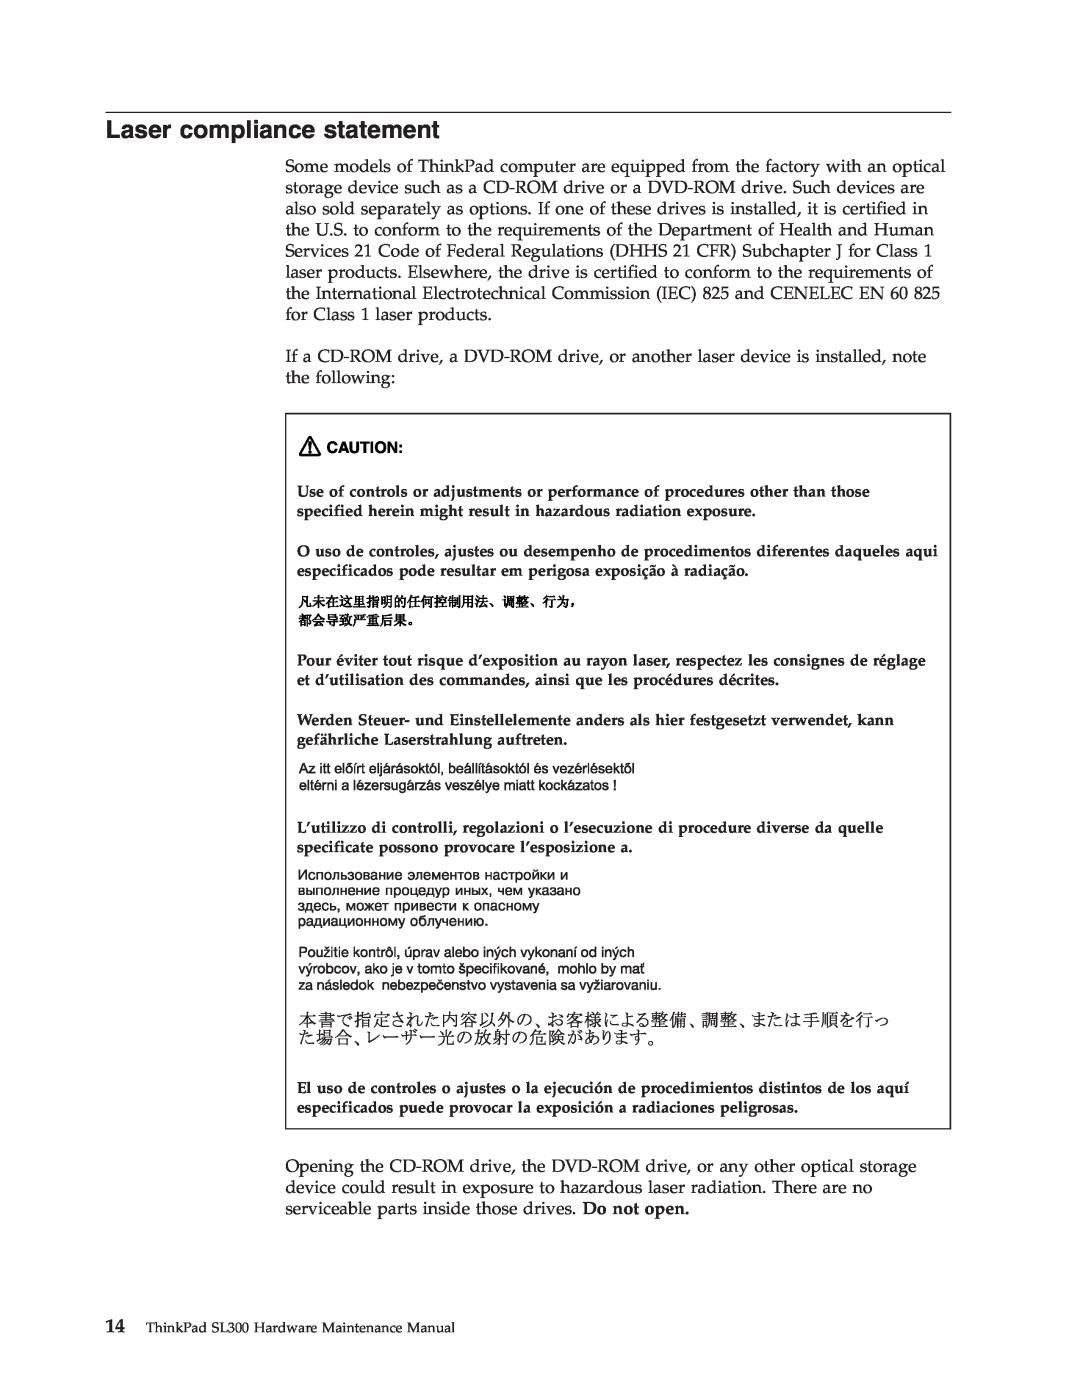 Lenovo manual Laser compliance statement, ThinkPad SL300 Hardware Maintenance Manual 